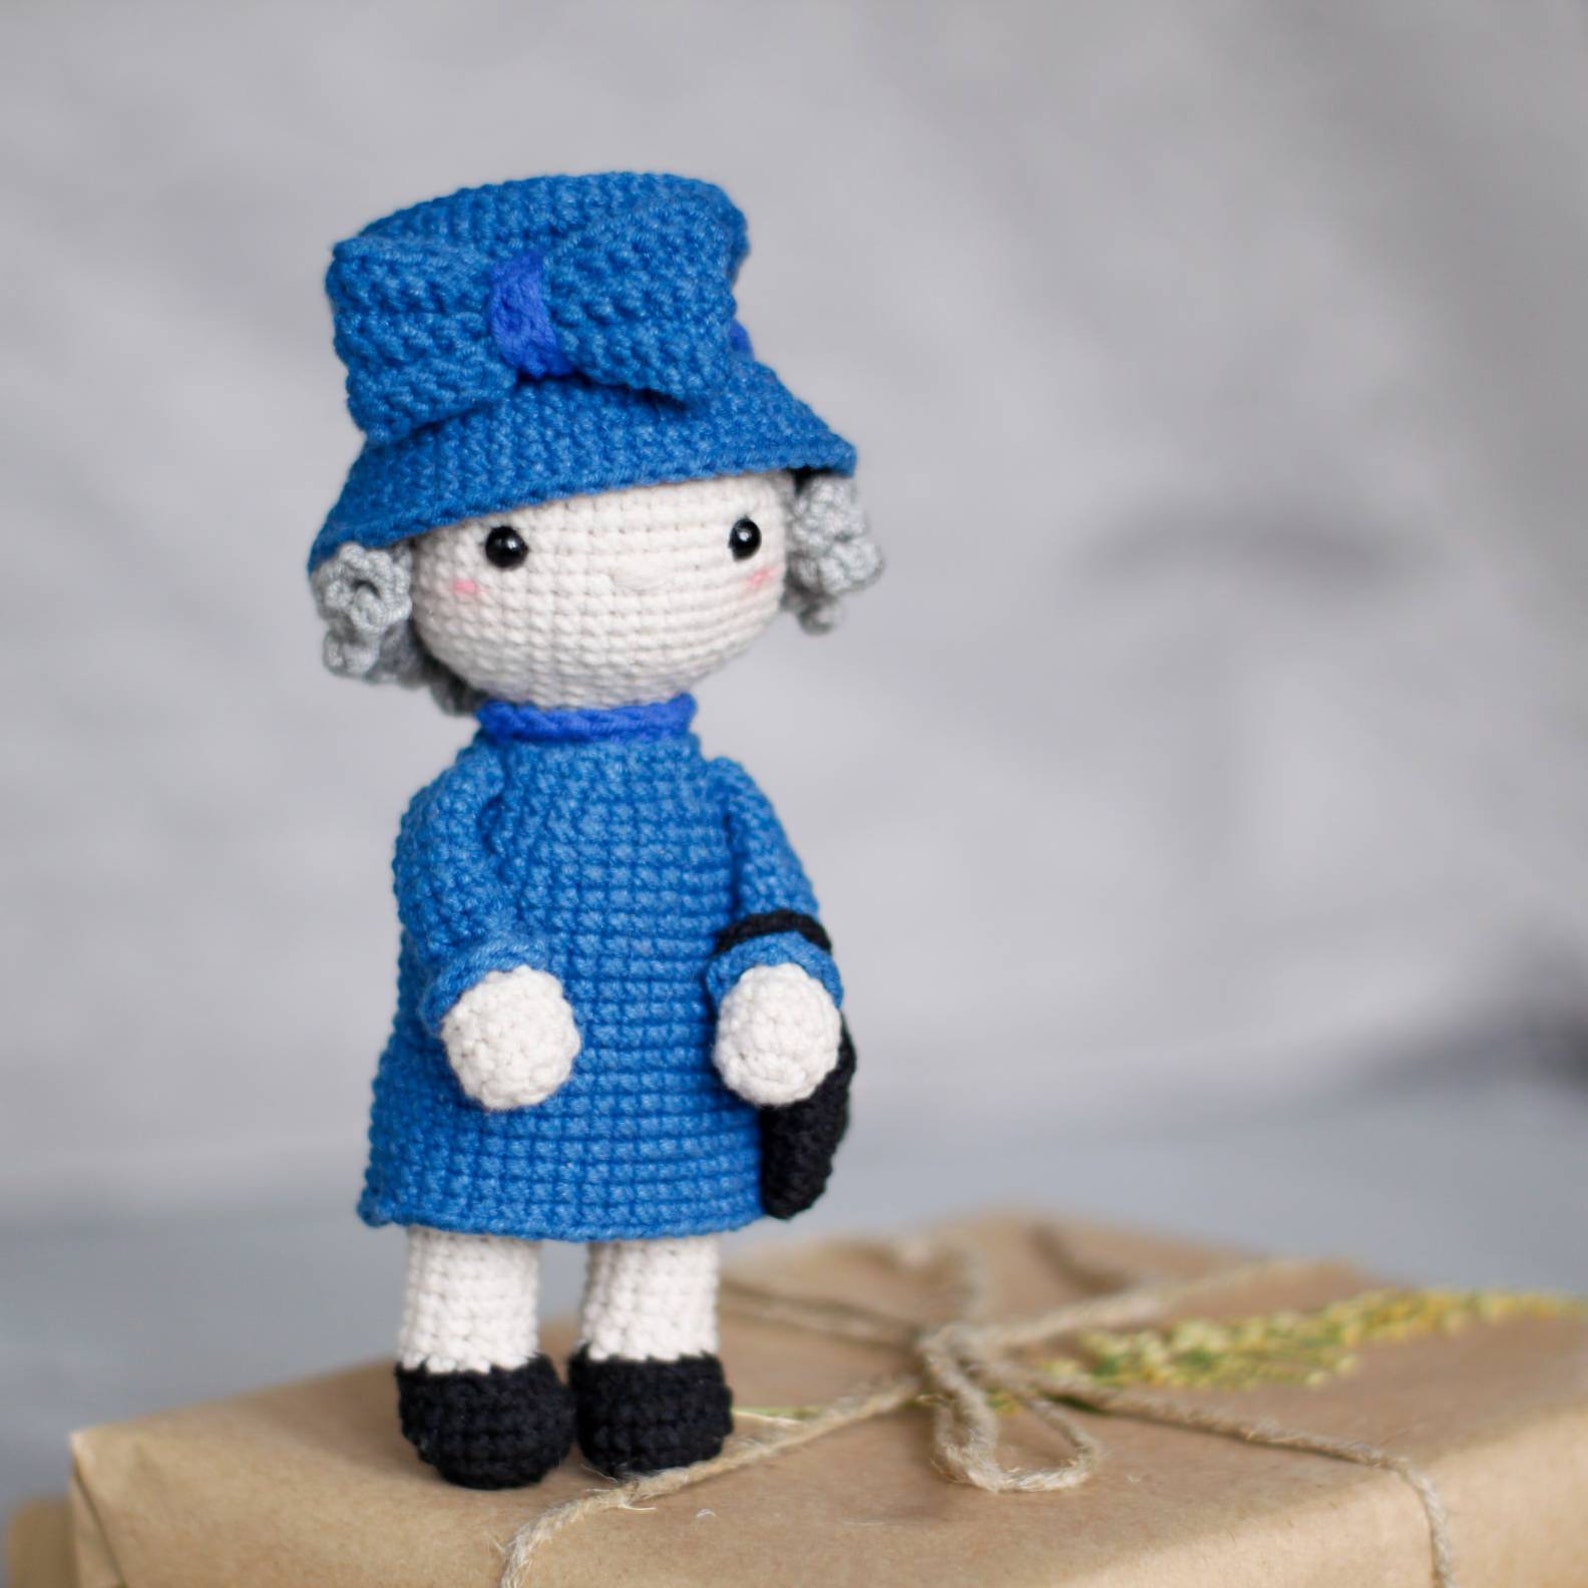 The Queen Elizabeth Crochet Pattern Amigurumi Queen Pattern - Etsy